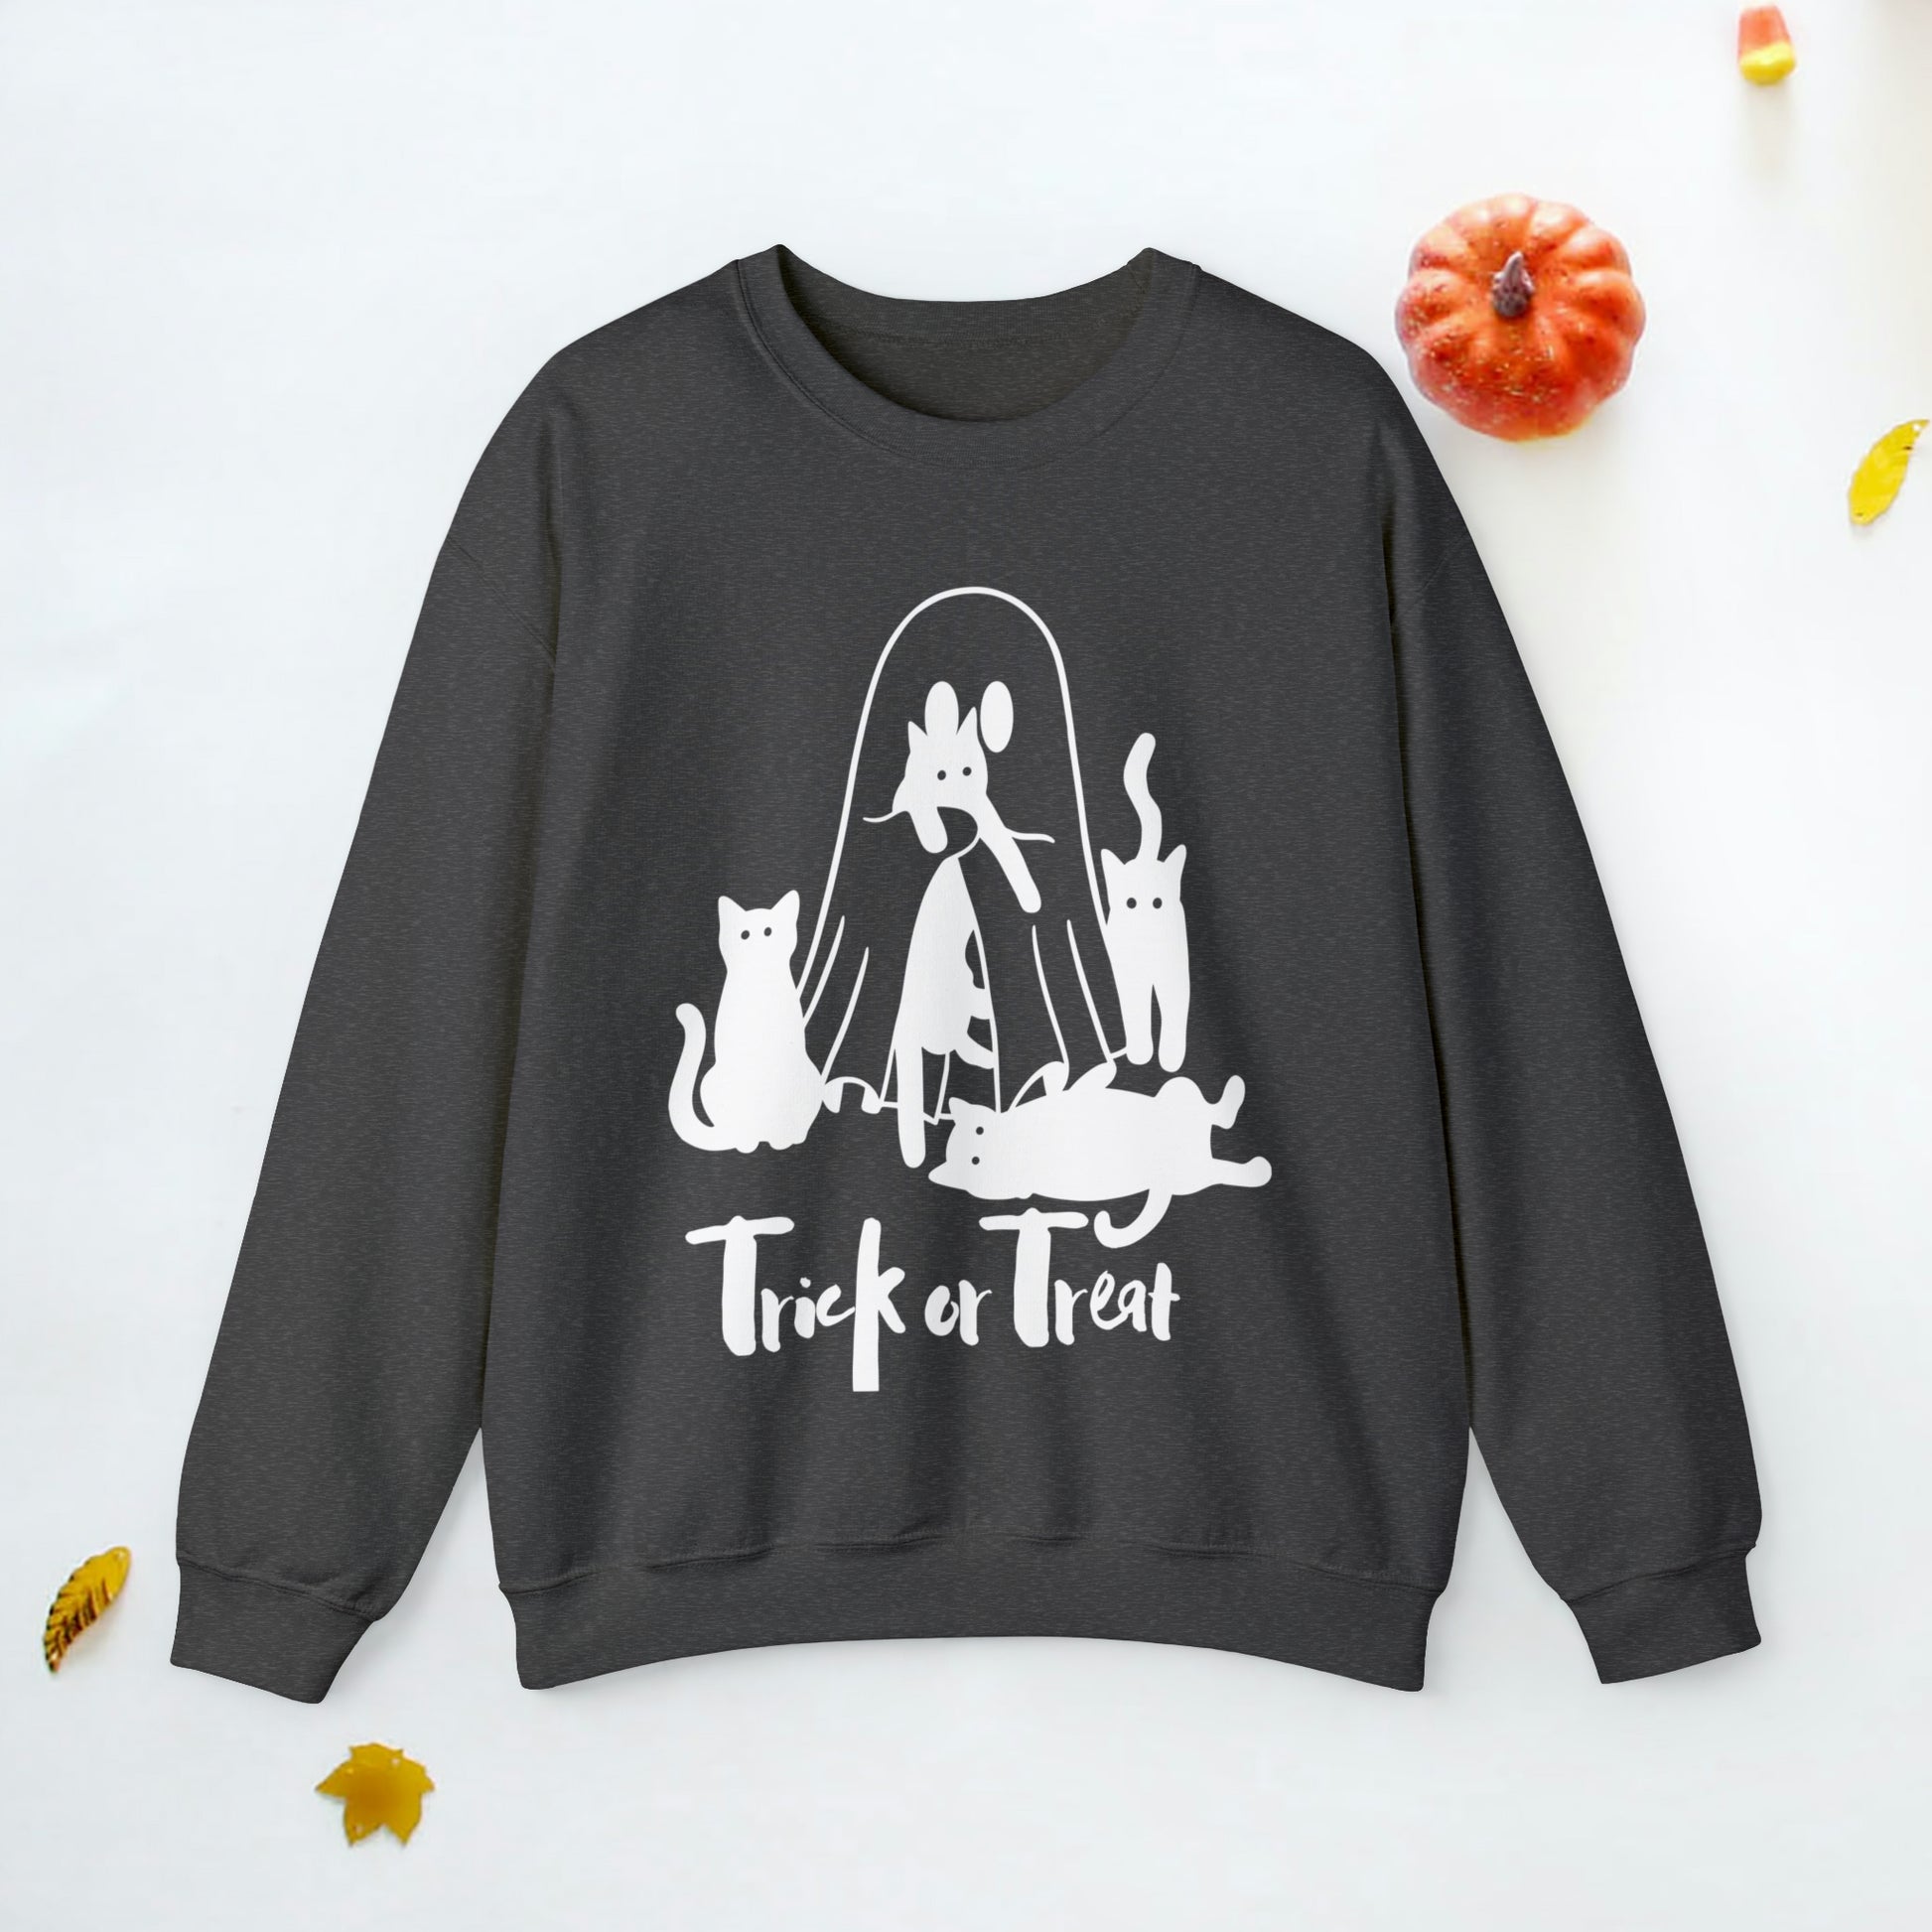 Ghost and cats Sweatshirt, Funny Cat Halloween Sweatshirt, Spooky Season pullover, Black Cats Ghost Halloween jumper, Cute Halloween sweater